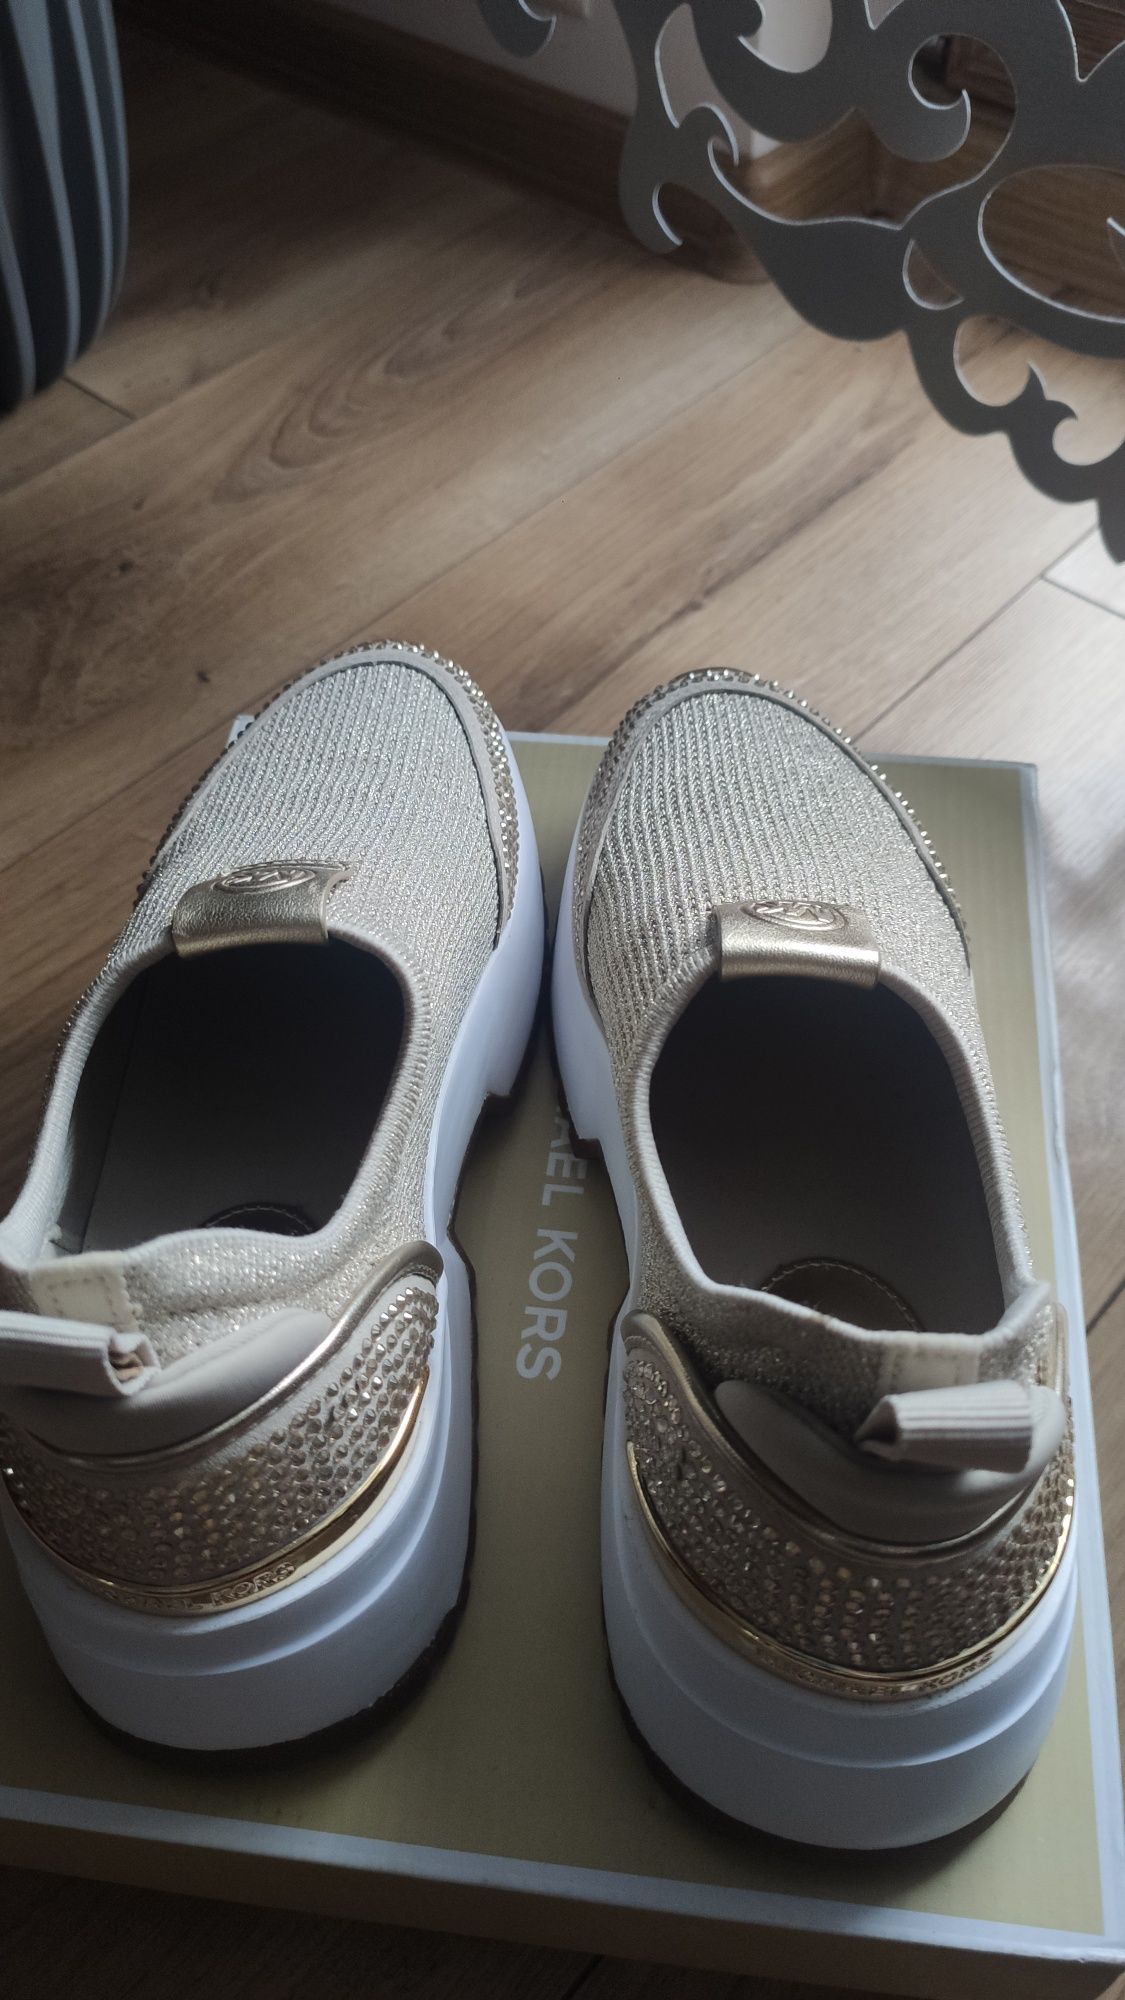 Sneakersy buty Michael Kors Muse Slip On złote oryginalne roz 6M/36